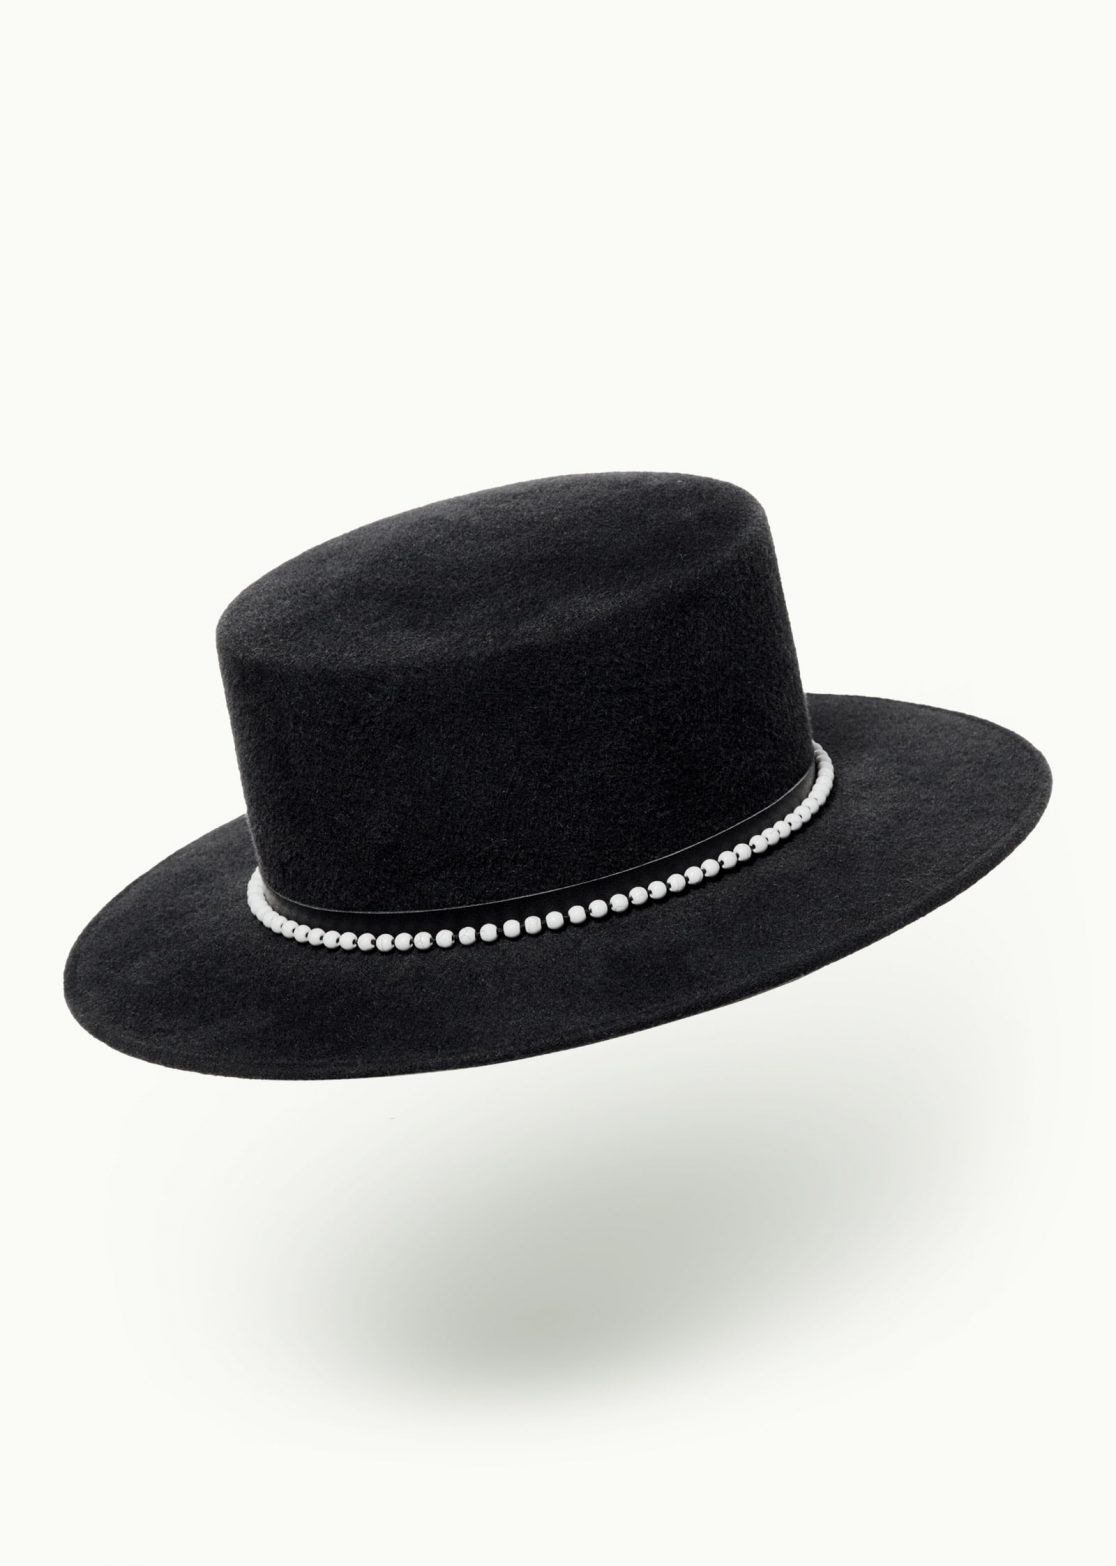 Hats - Women - Unisex - Men - Spaniard Black Velour Image Primary